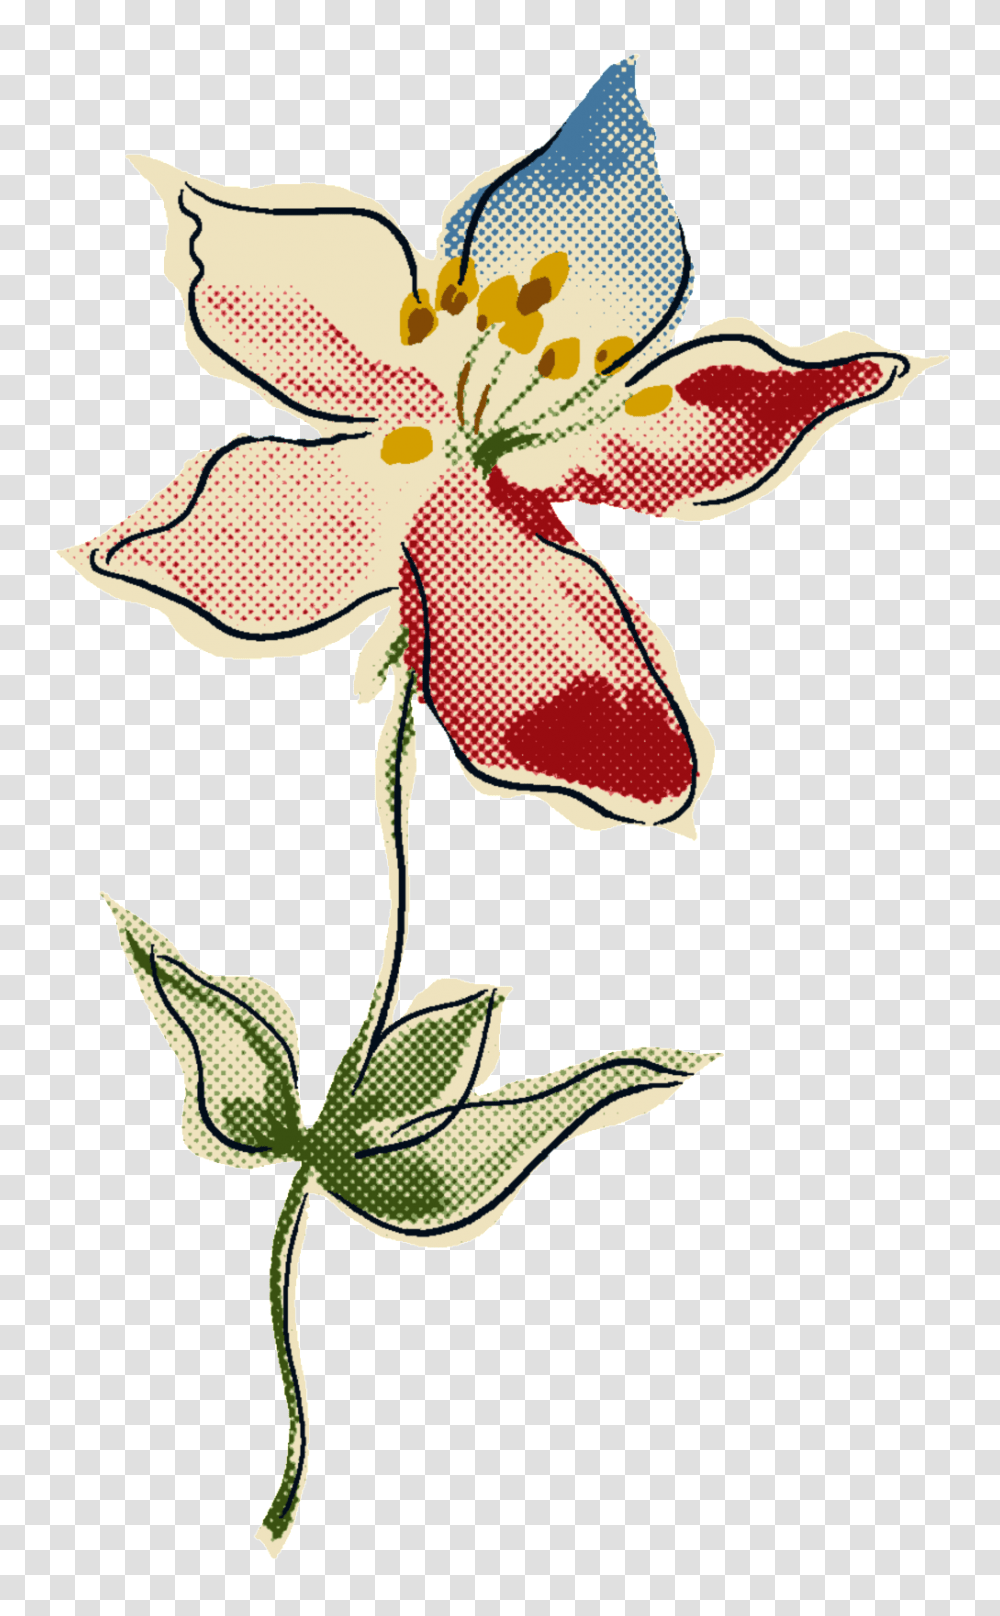 Hand Drawn Doodle Flowers Decorative Elements Free Download, Plant, Lily, Blossom, Pollen Transparent Png